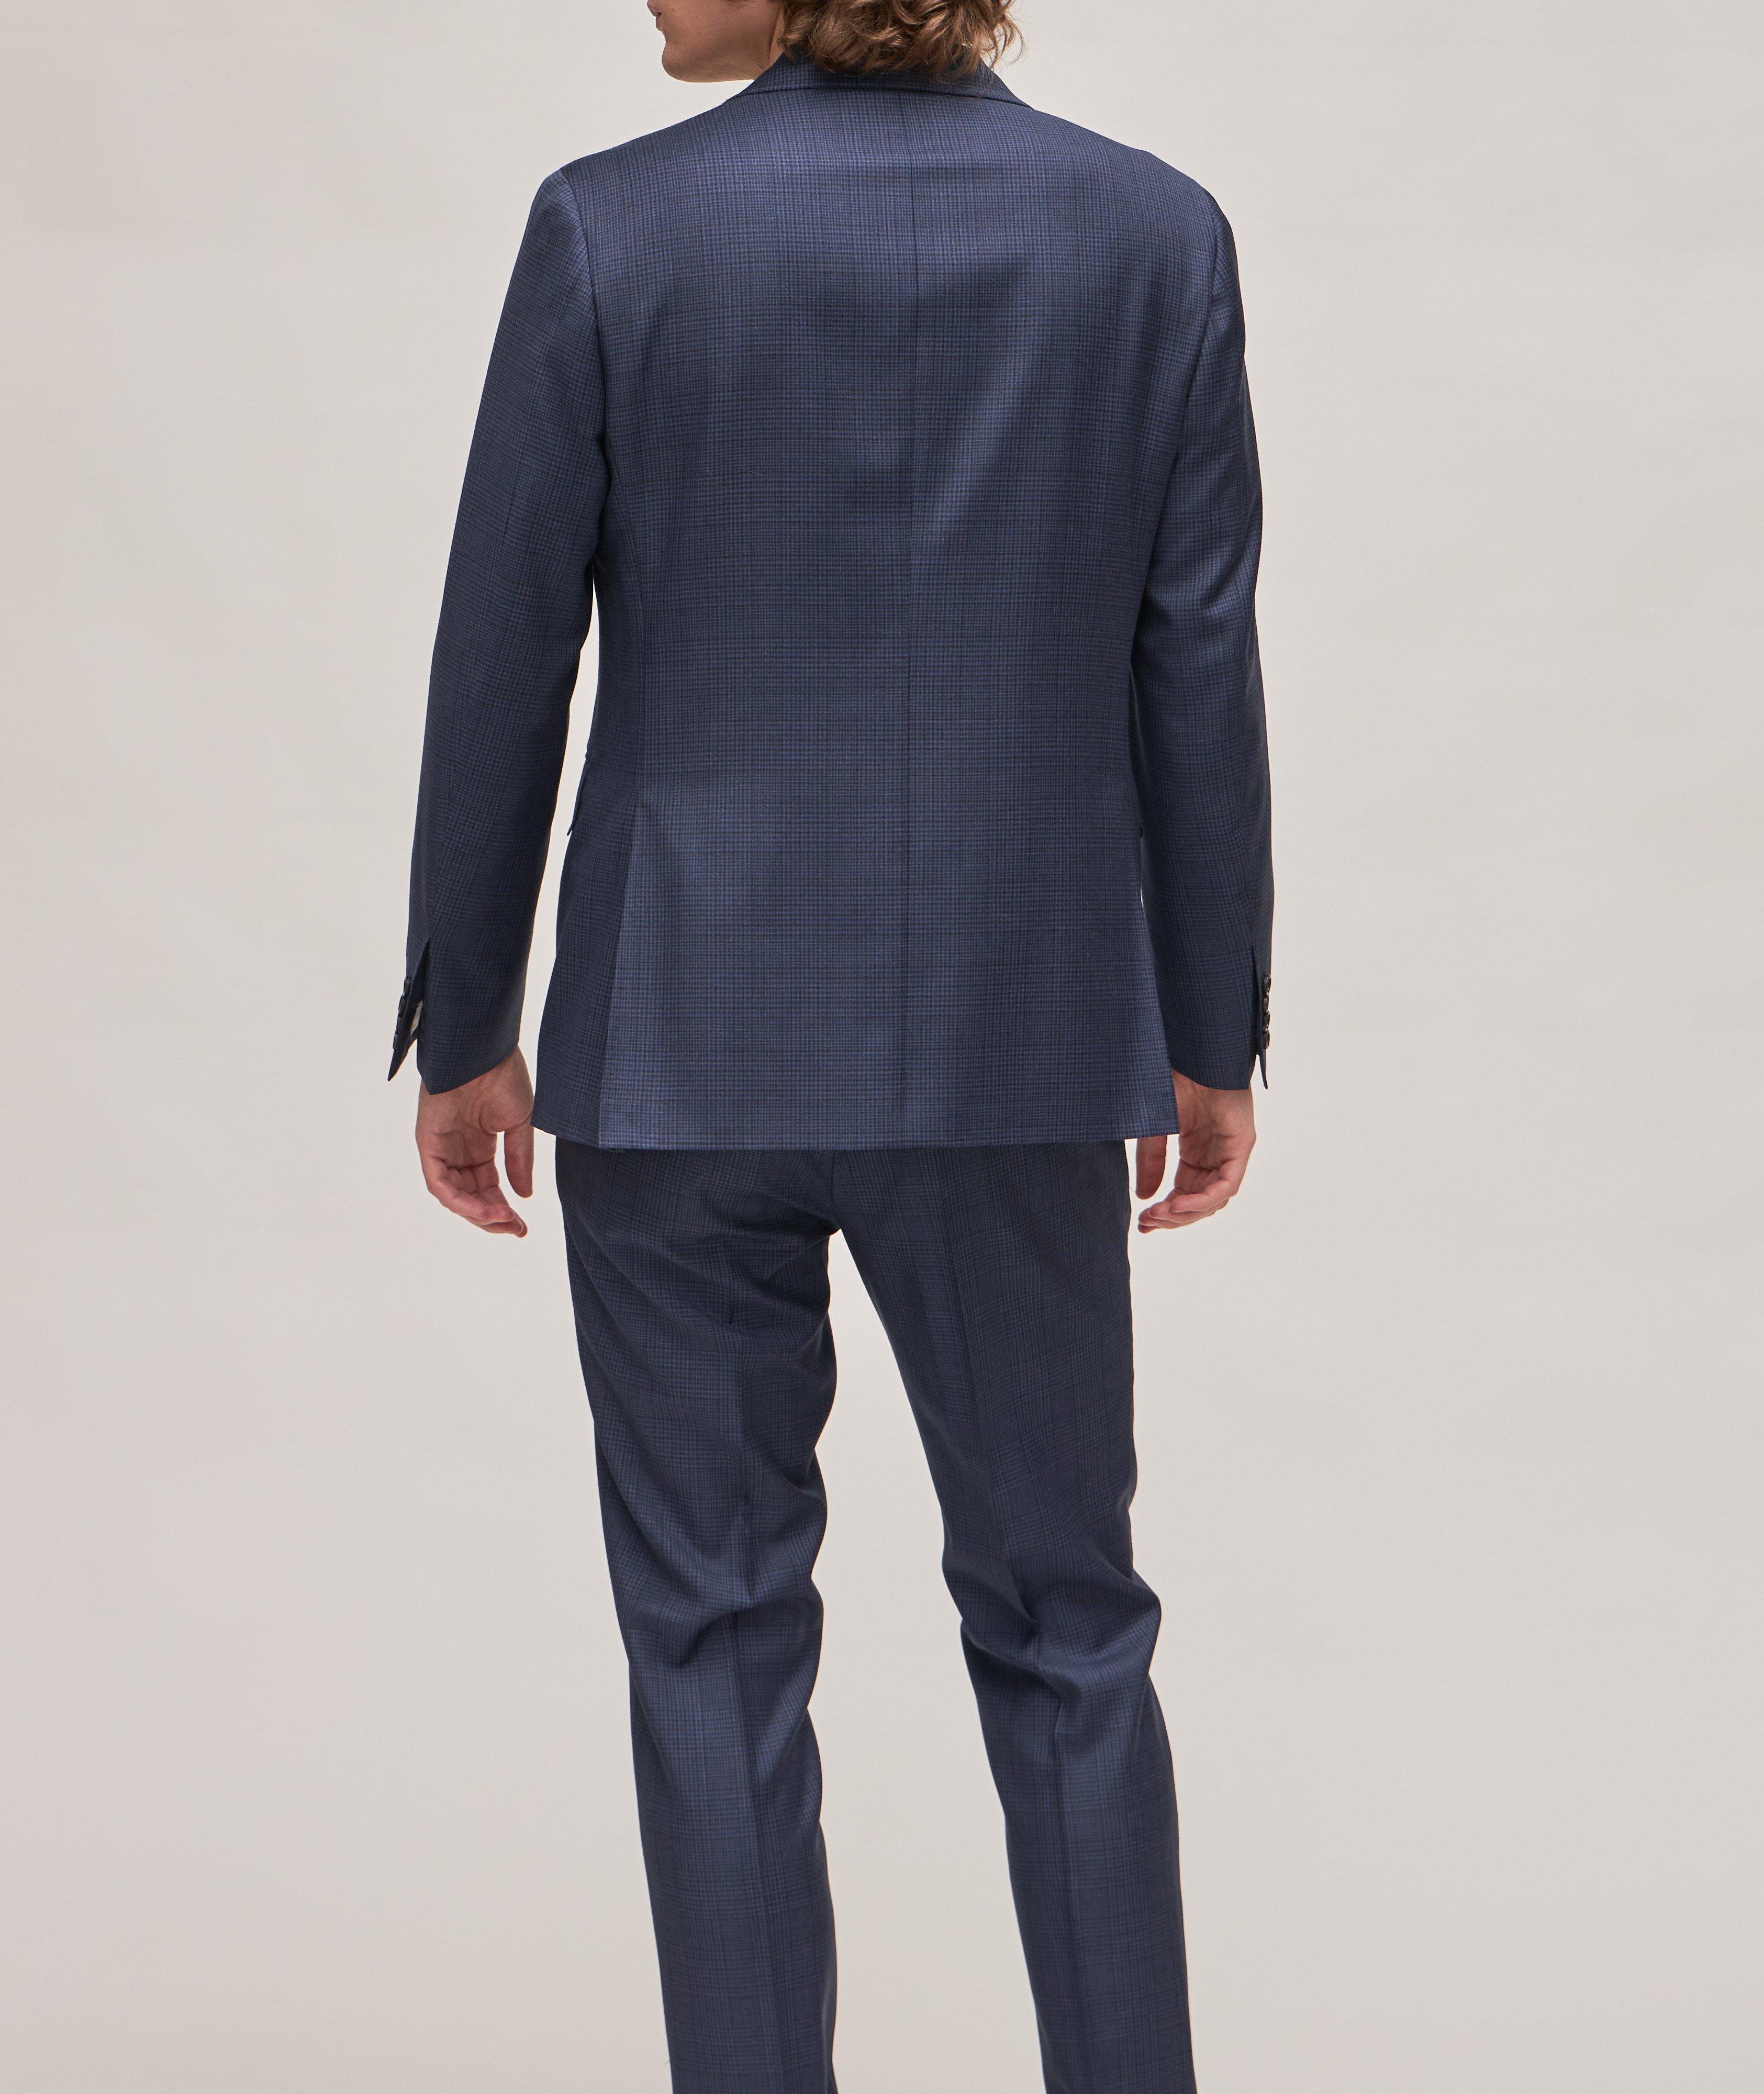 Kei Checkered Wool Suit  image 2